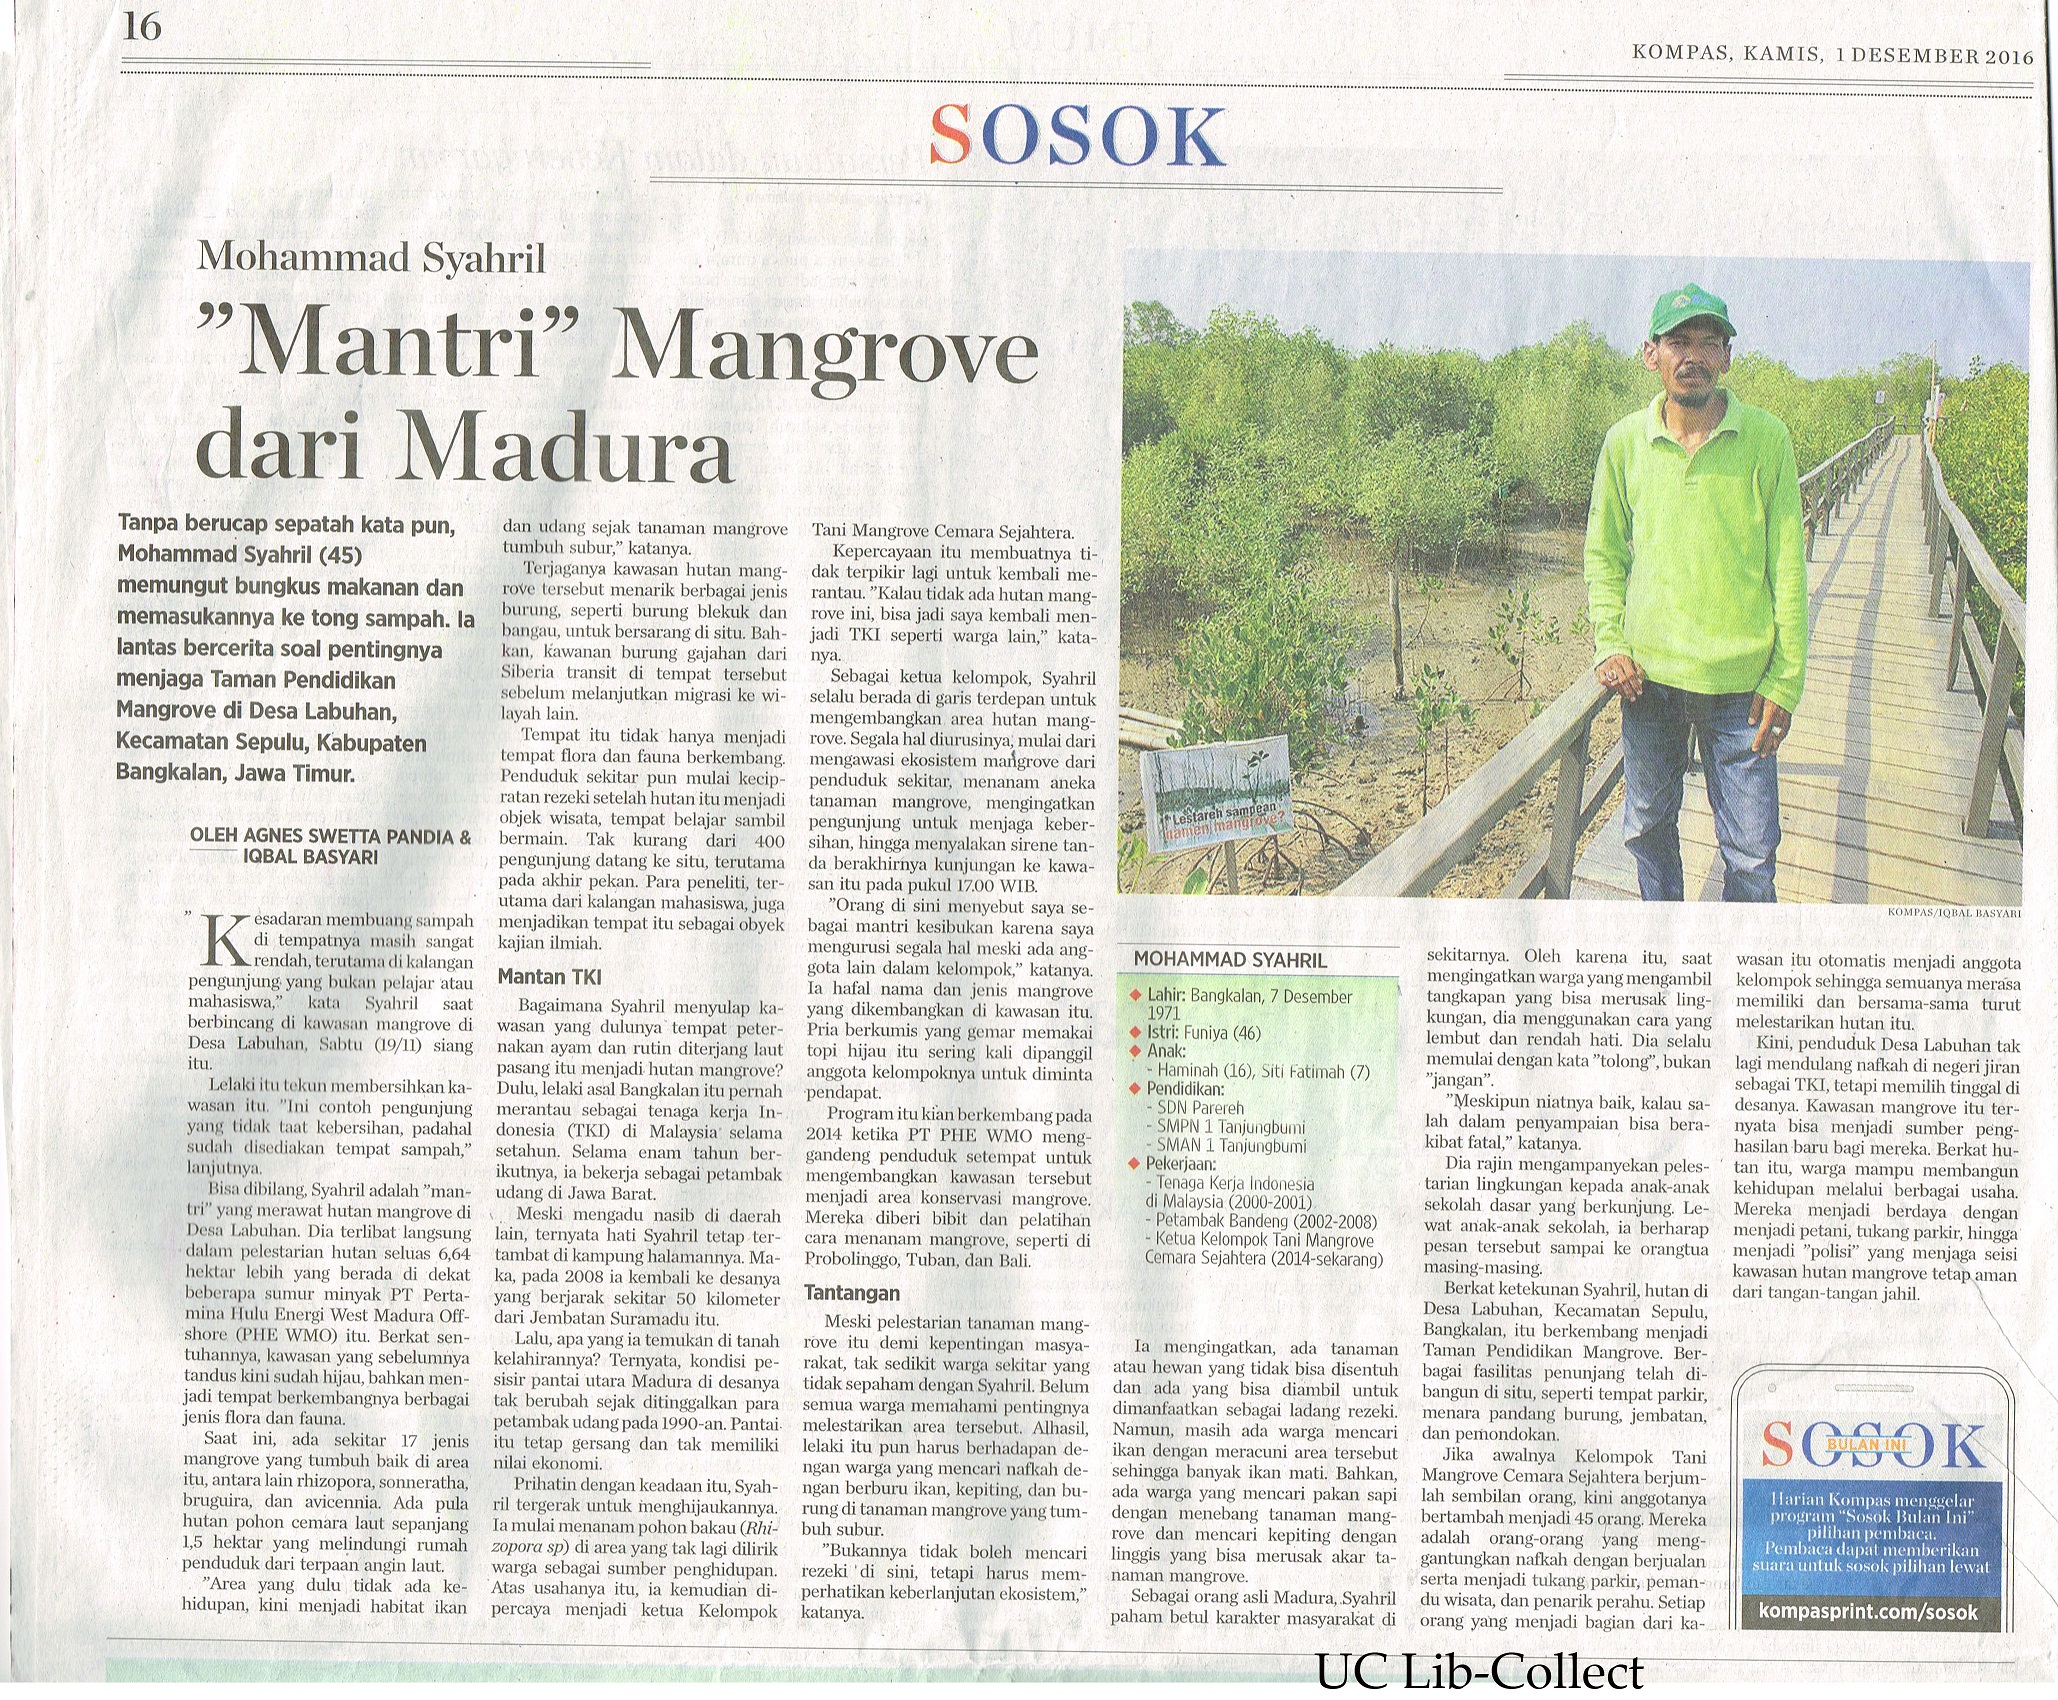 Mantri Mangrove dari Madura. Kompas. 1 Desember 2016.Hal.16